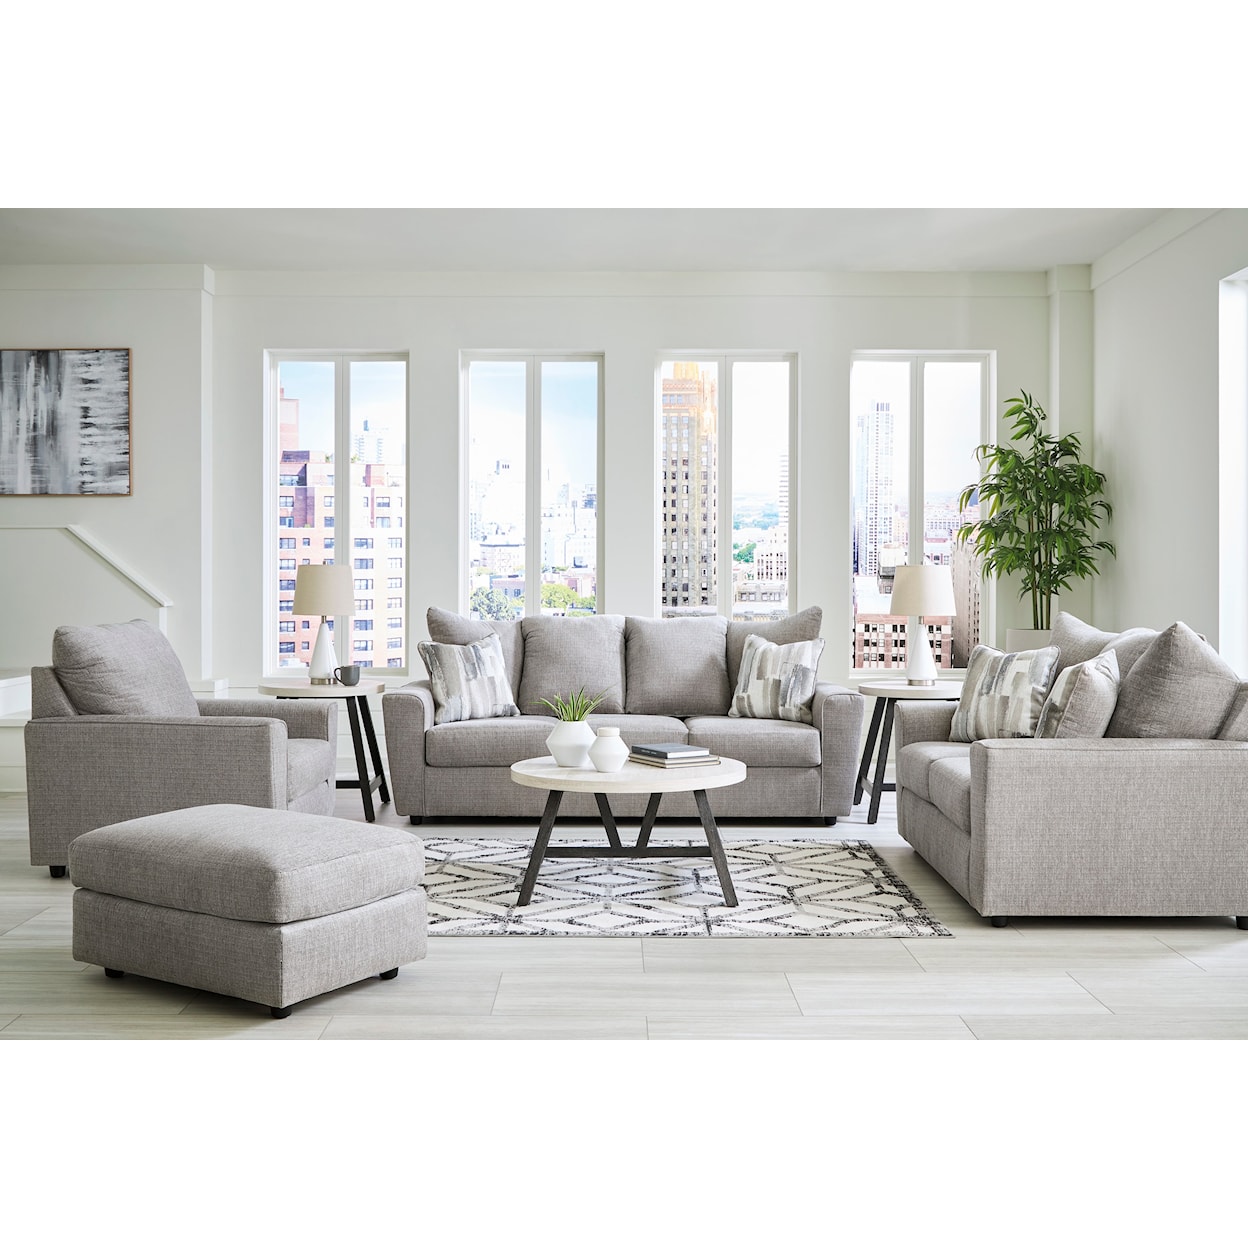 Ashley Furniture Signature Design Stairatt Living Room Set